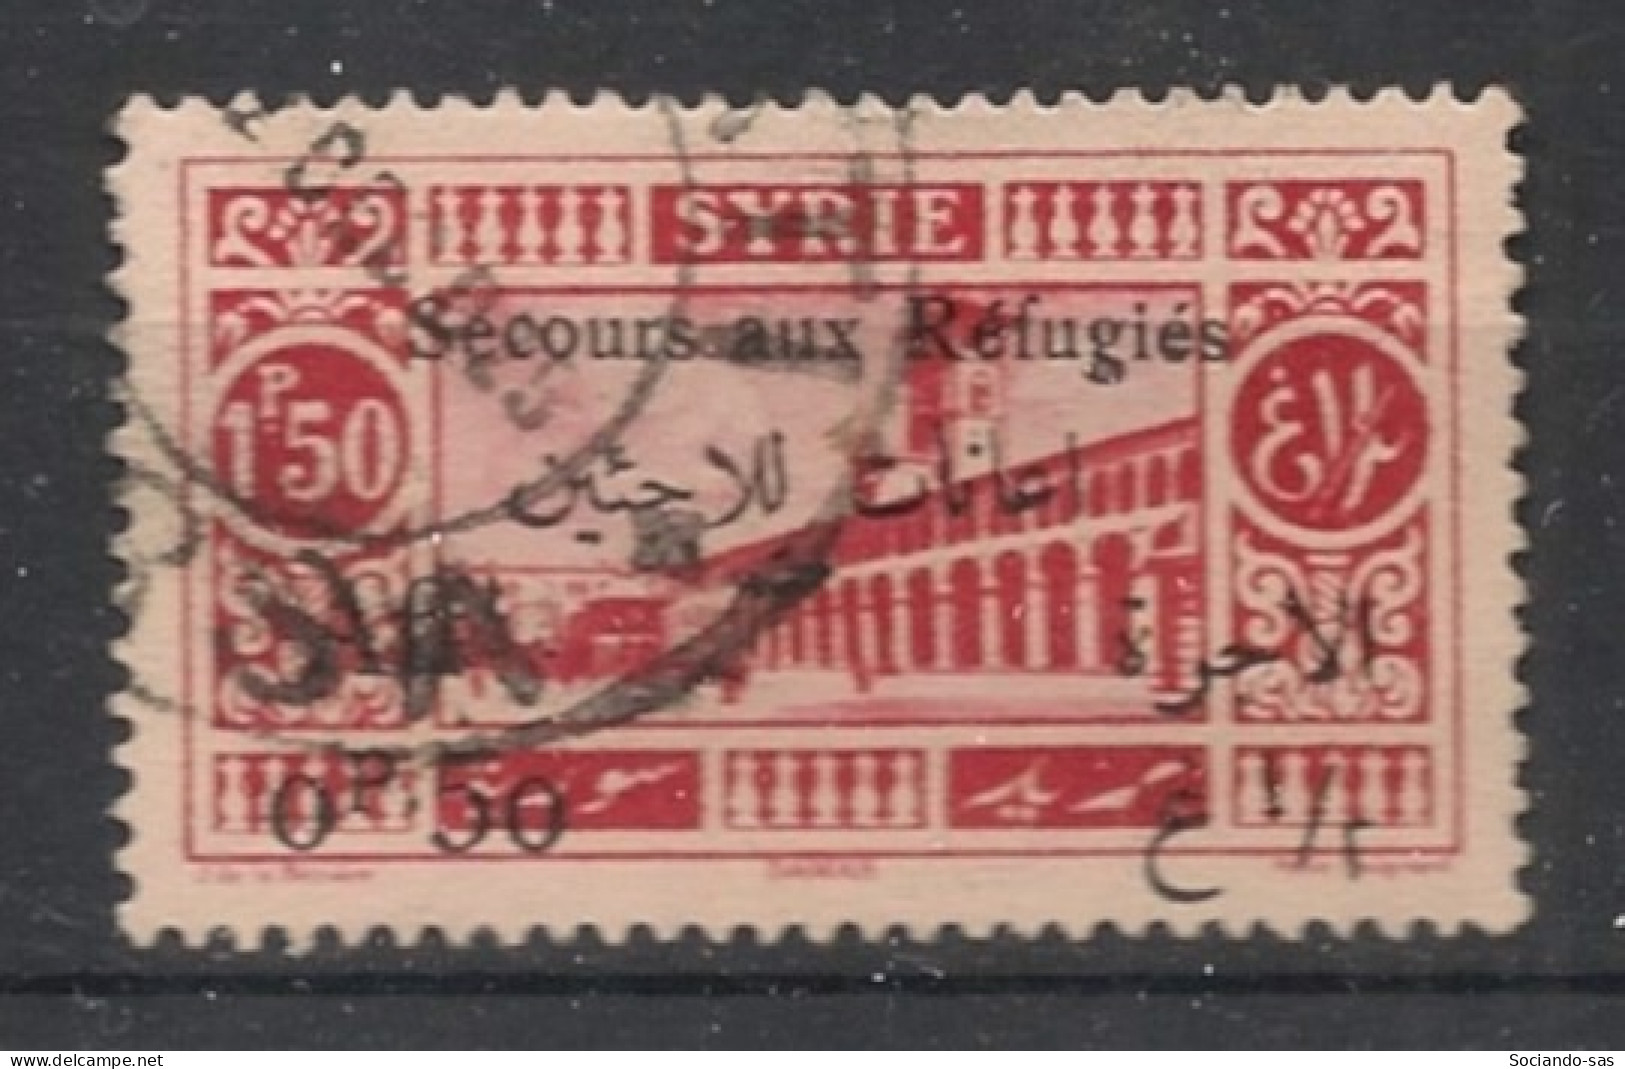 SYRIE - 1926 - N°YT. 172 - Réfugiés 0pi50 Sur 1pi50 - Oblitéré / Used - Gebraucht